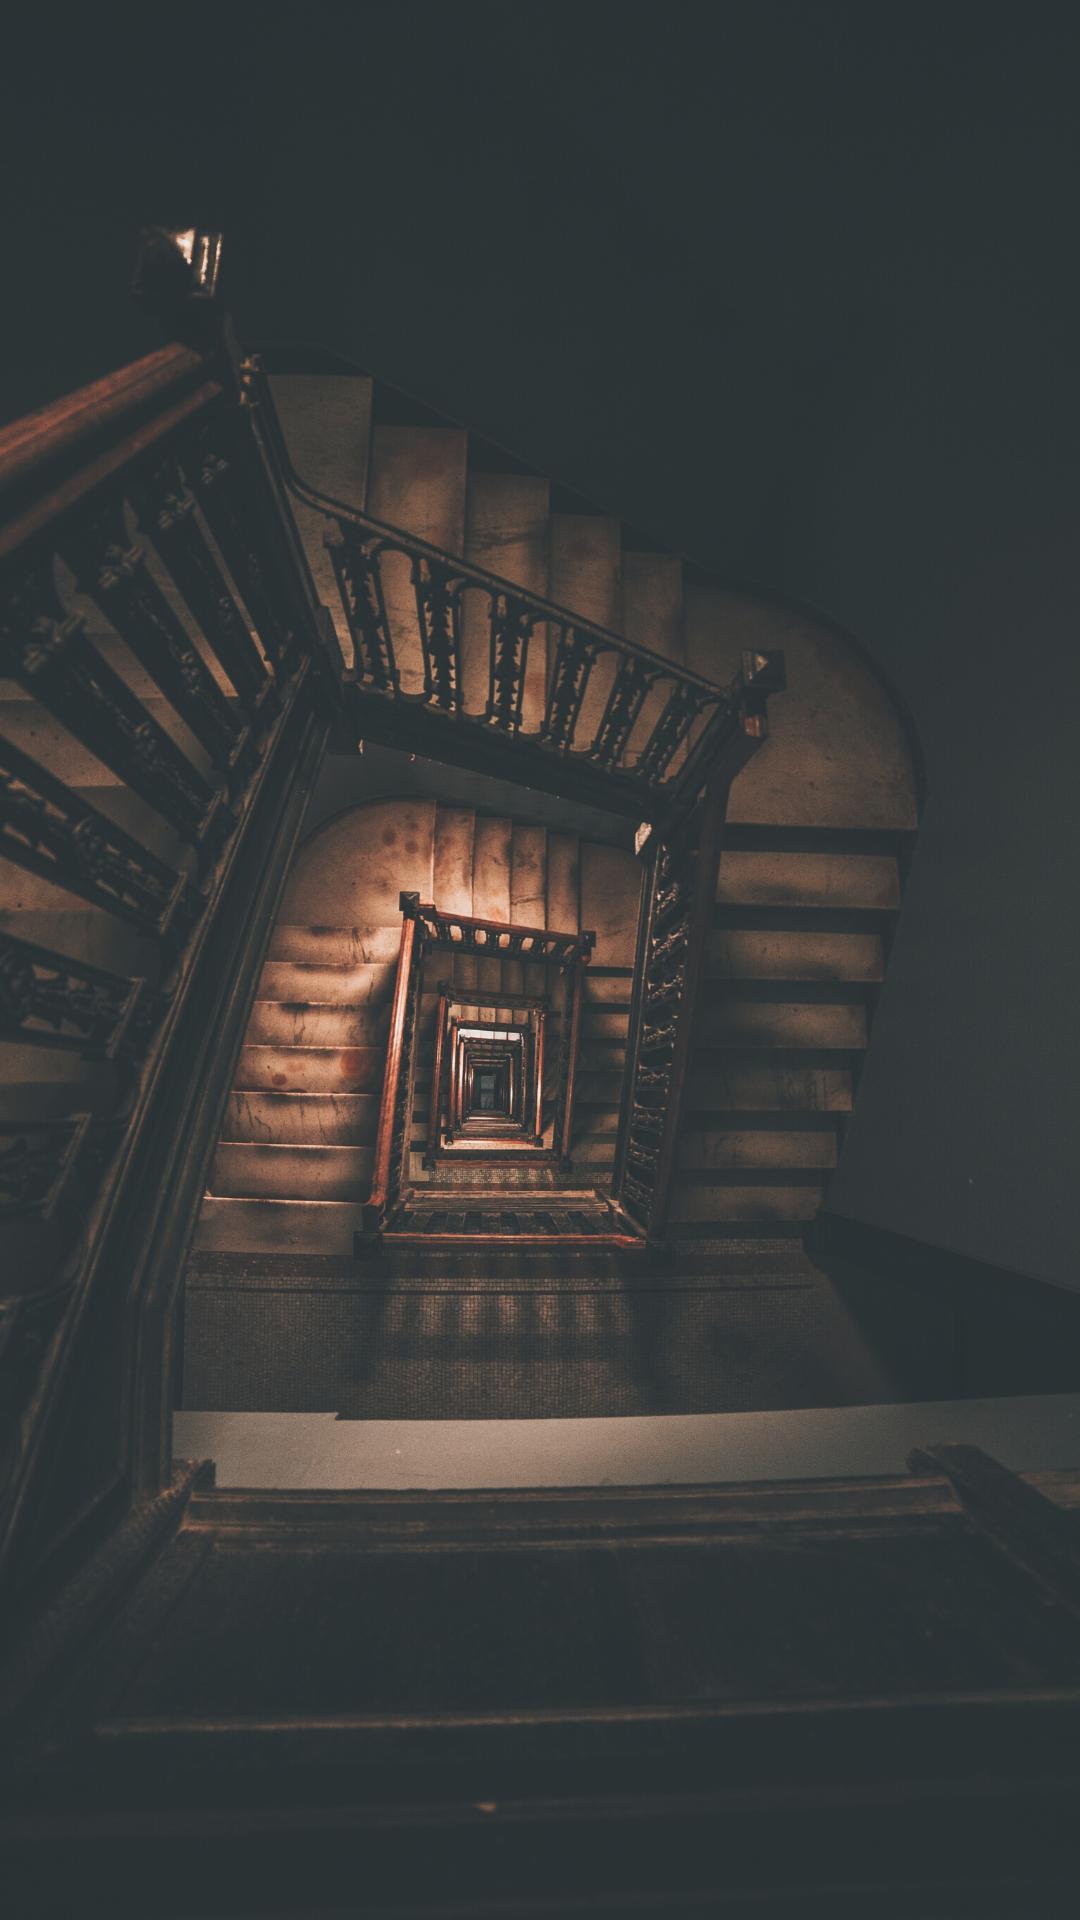 A dark stairwell with a spiral staircase - Dark academia